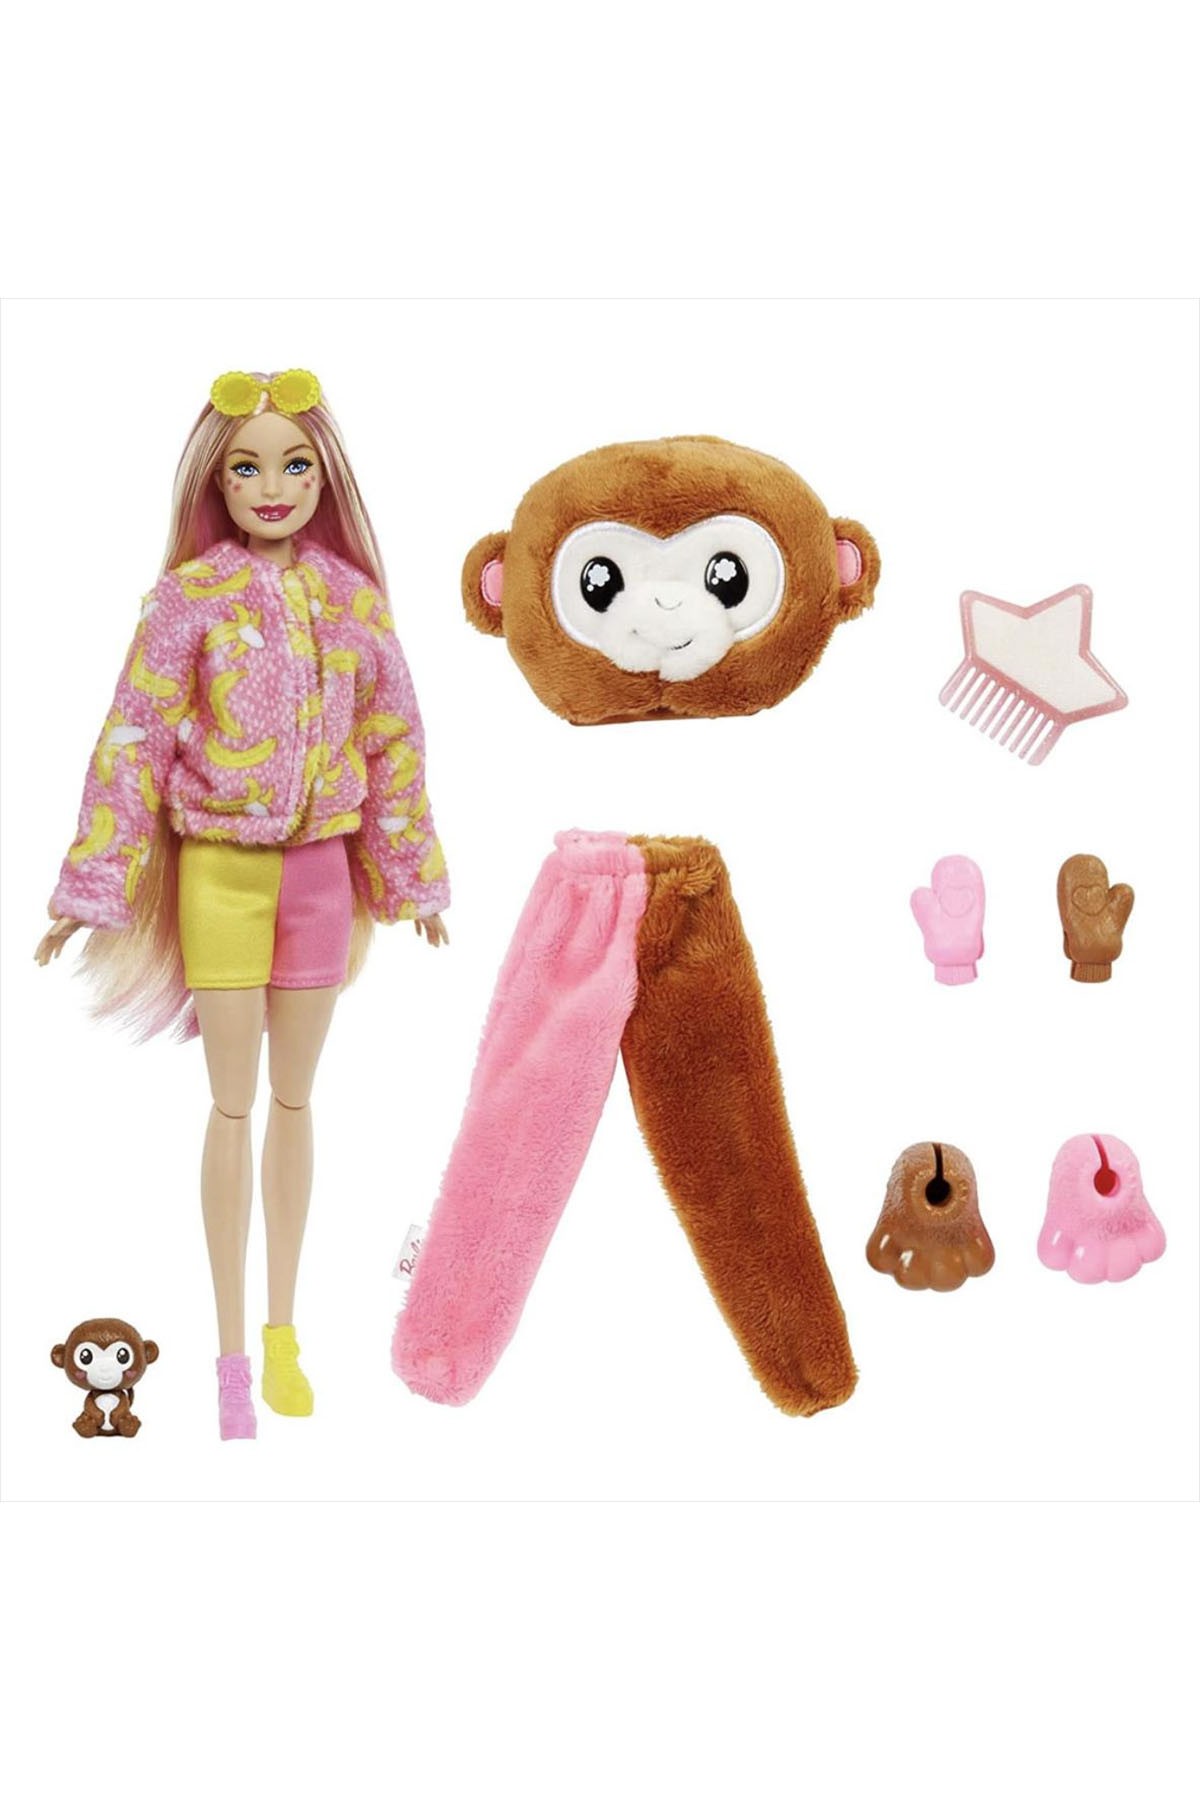 Barbie Cutie Reveal Bebekler Barbie Tropikal Orman Serisi HKR01